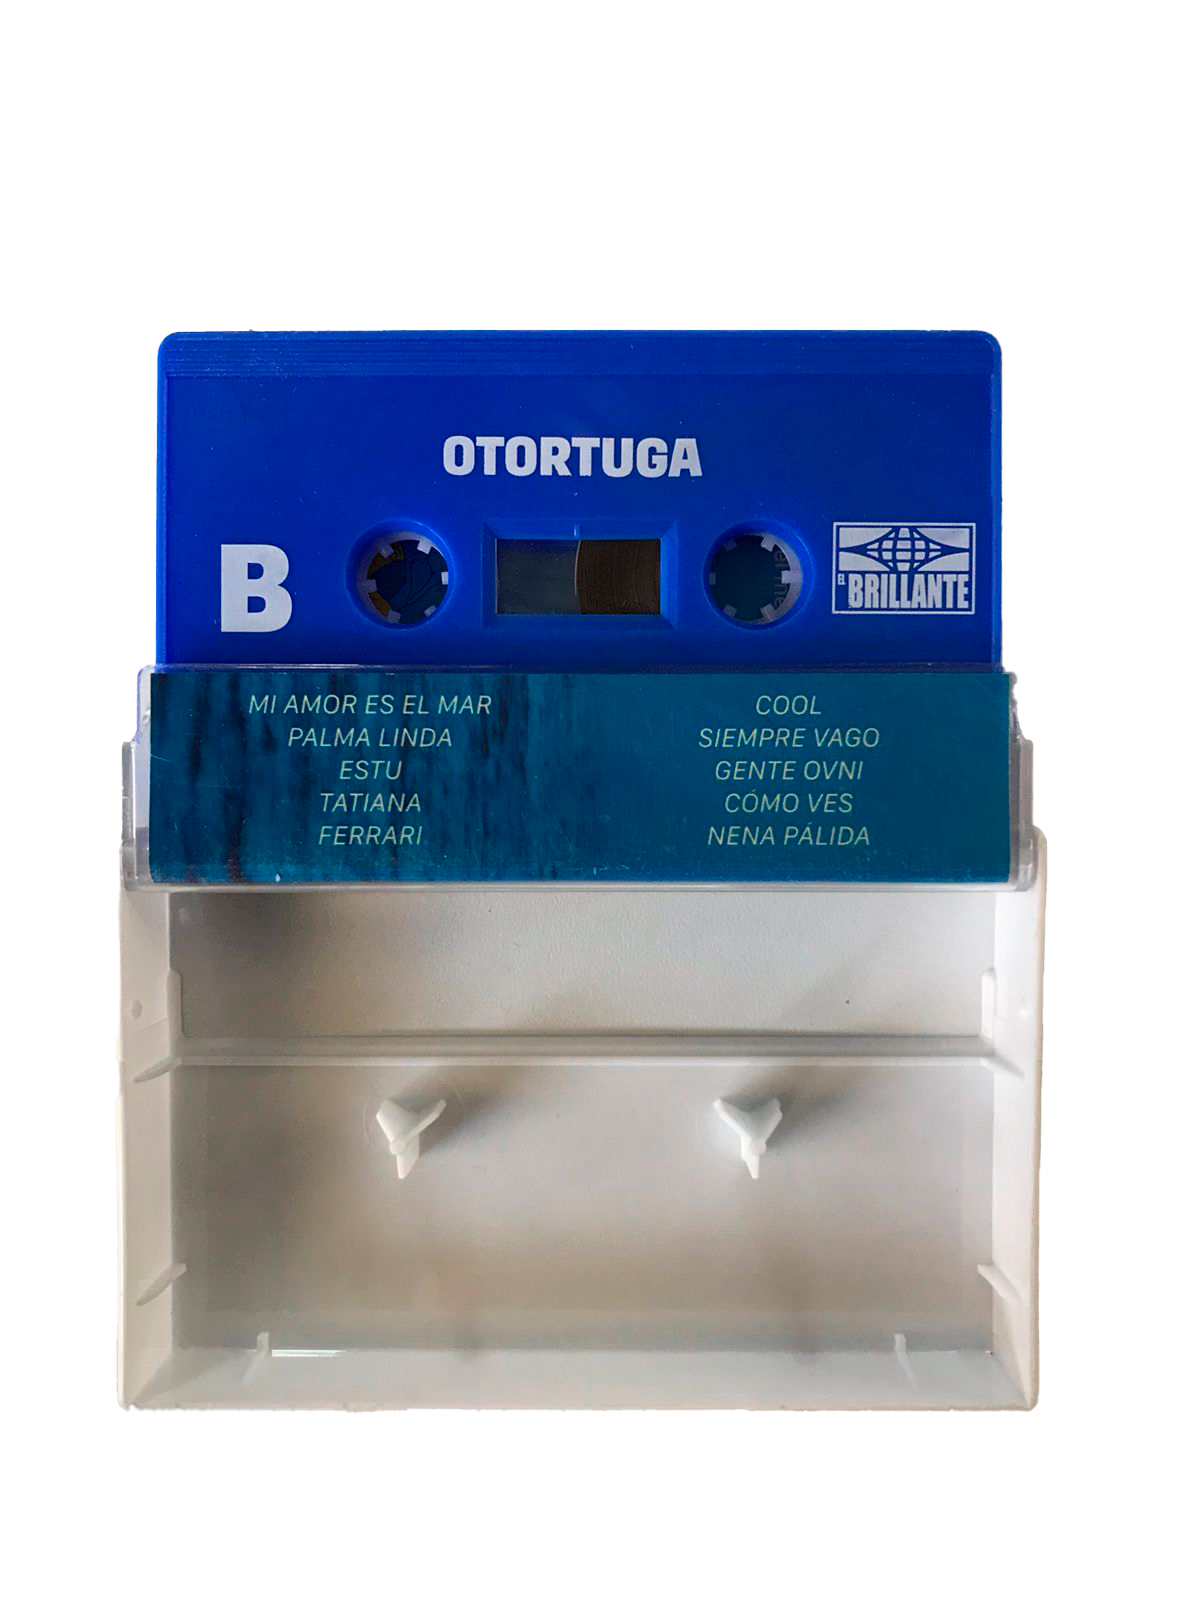 Cassette O Tortuga - Hipnosis